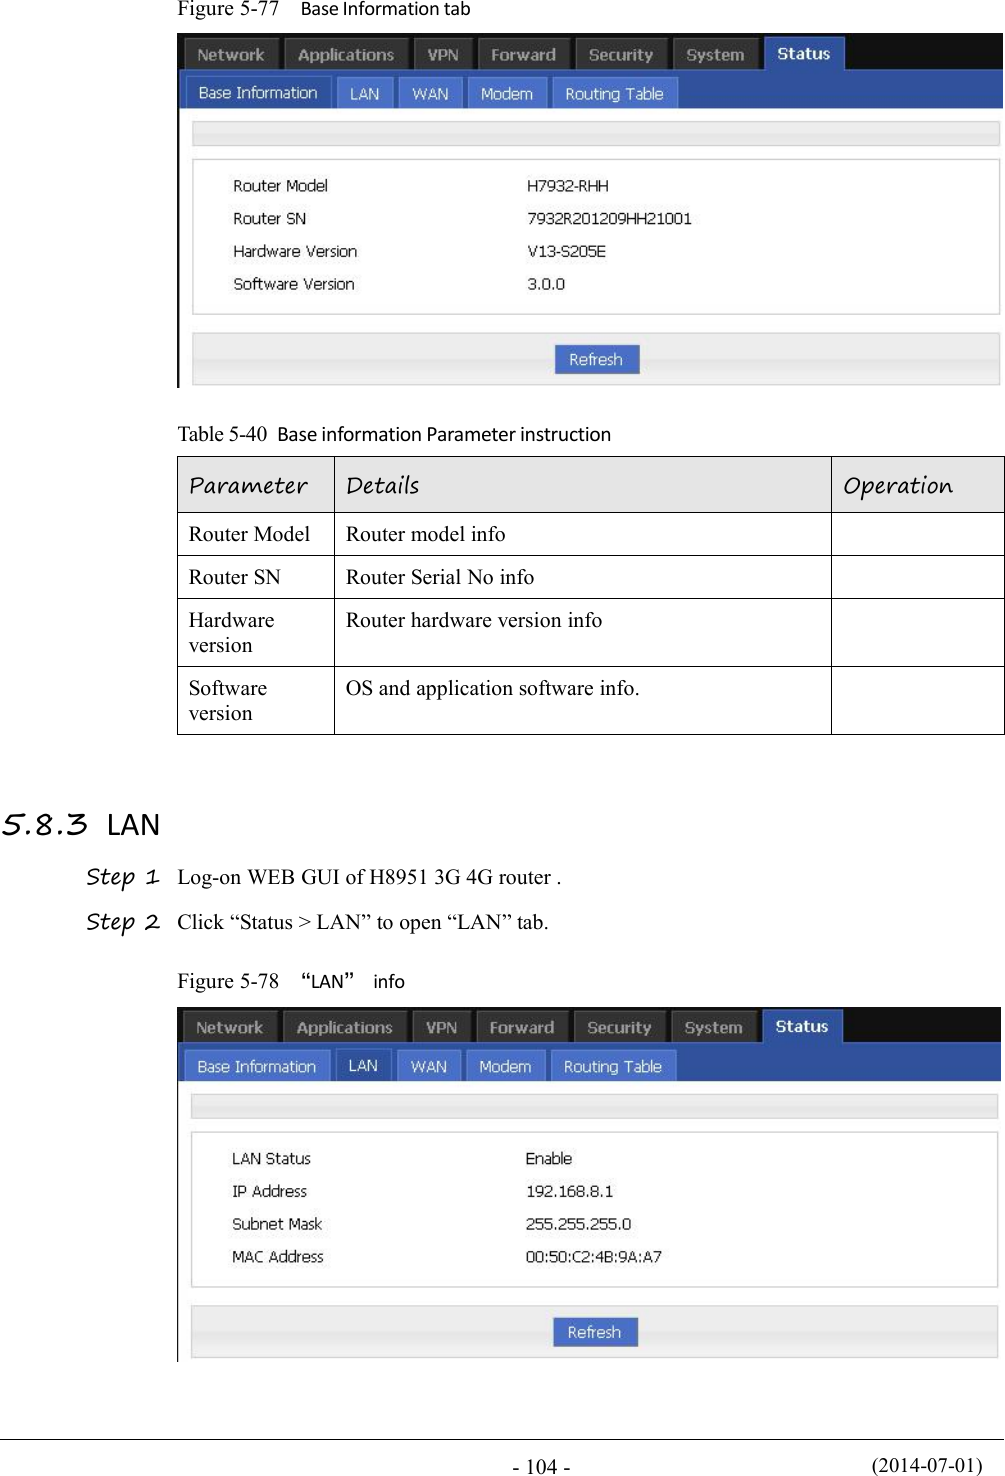 (2014-07-01)- 104 -Figure 5-77 Base Information tabTable 5-40 Base information Parameter instructionParameterDetailsOperationRouter ModelRouter model infoRouter SNRouter Serial No infoHardwareversionRouter hardware version infoSoftwareversionOS and application software info.5.8.3 LANStep 1 Log-on WEB GUI of H8951 3G 4G router .Step 2 Click “Status &gt; LAN” to open “LAN” tab.Figure 5-78 “LAN”info